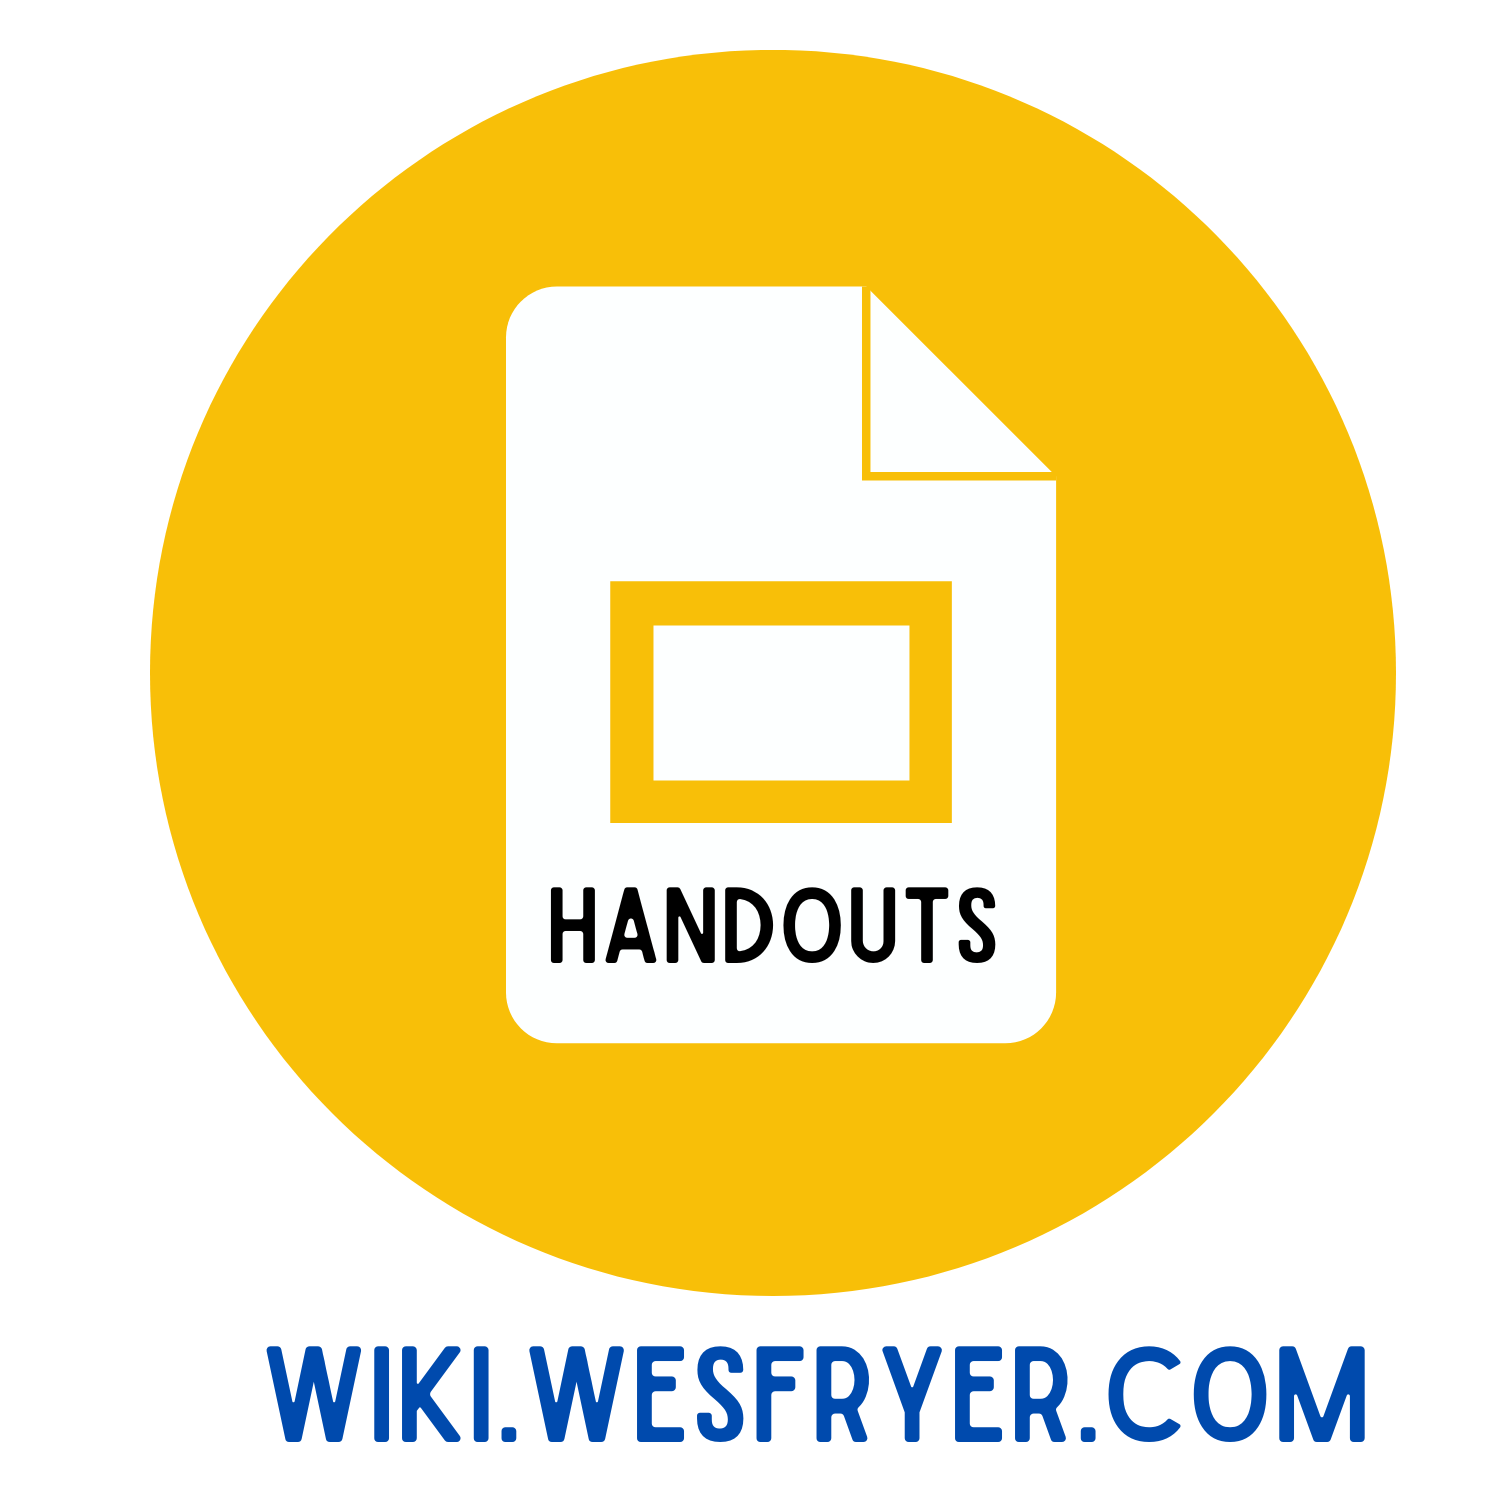 Presentation Handouts (and slides) from Wesley Fryer